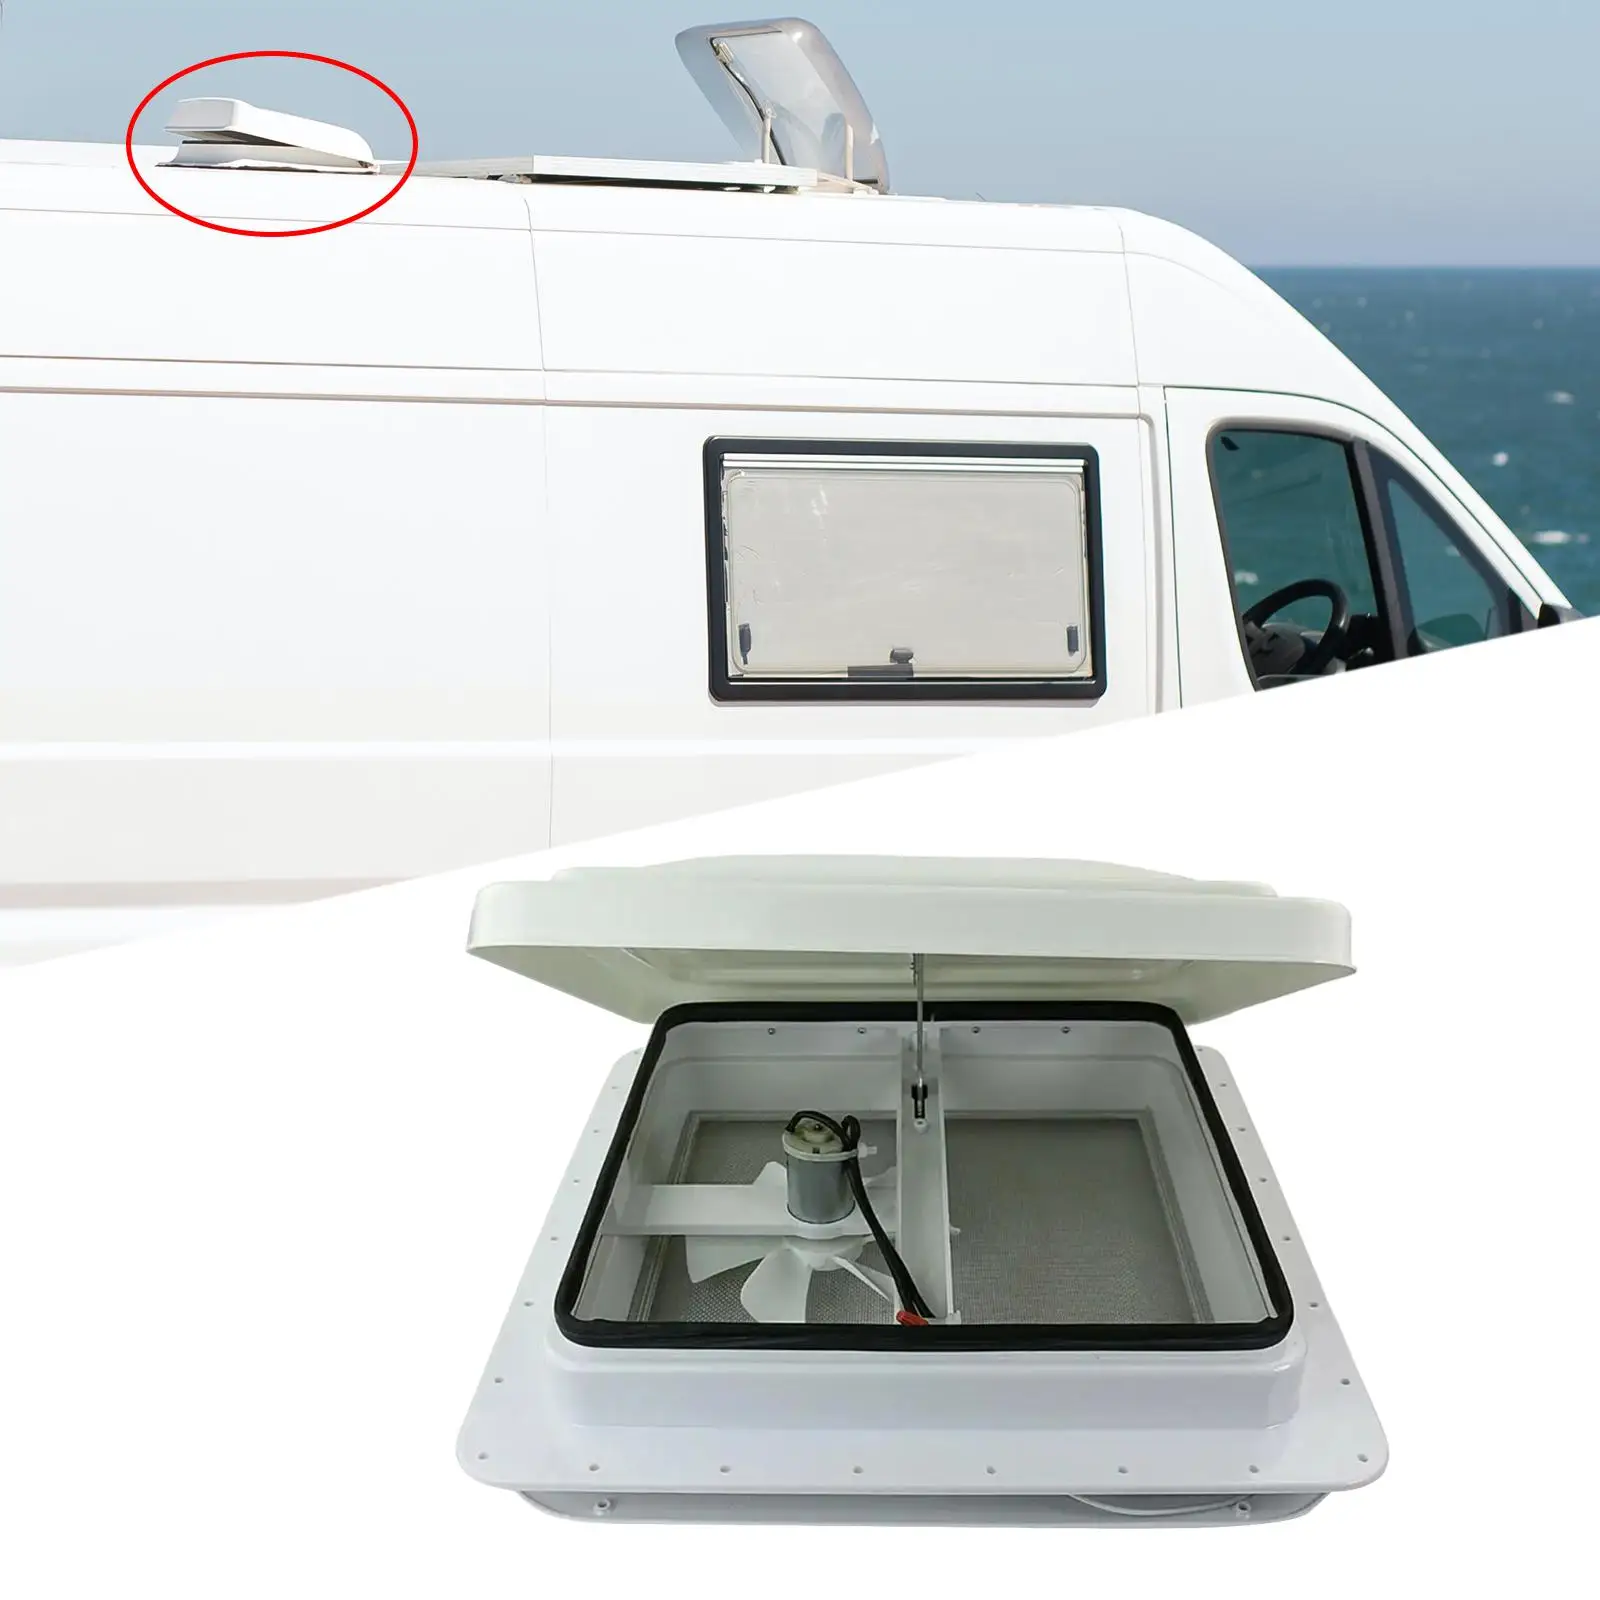 Air Ventilation Simple Installation Weatherproof Leakproof with Lid Air Circulates Vent for Camper Van RV Motorhome Trailer